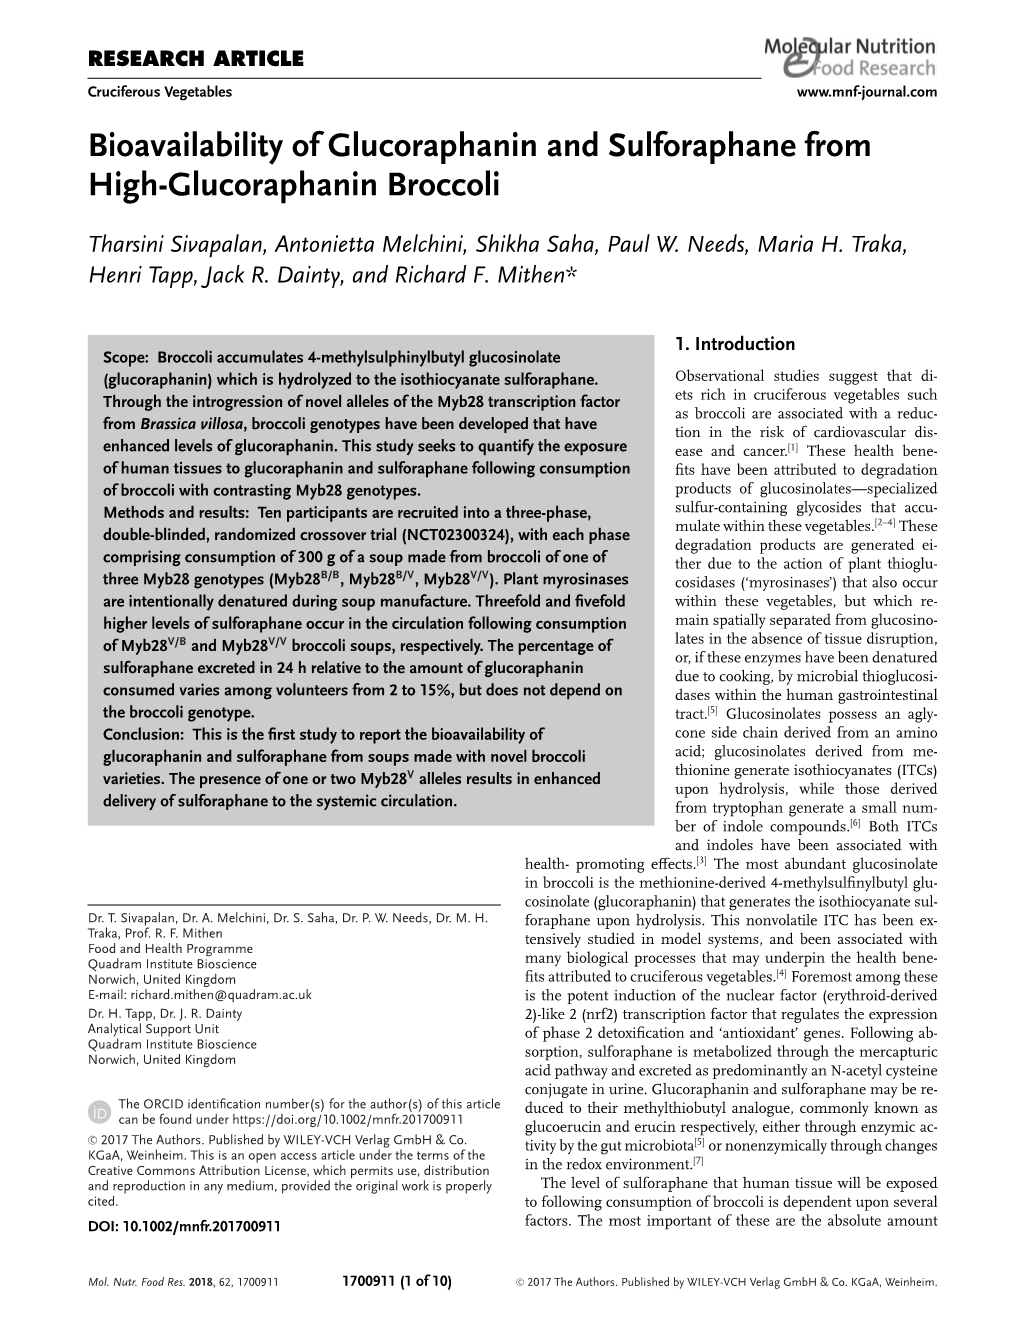 Bioavailability of Glucoraphanin and Sulforaphane from High&#X02010